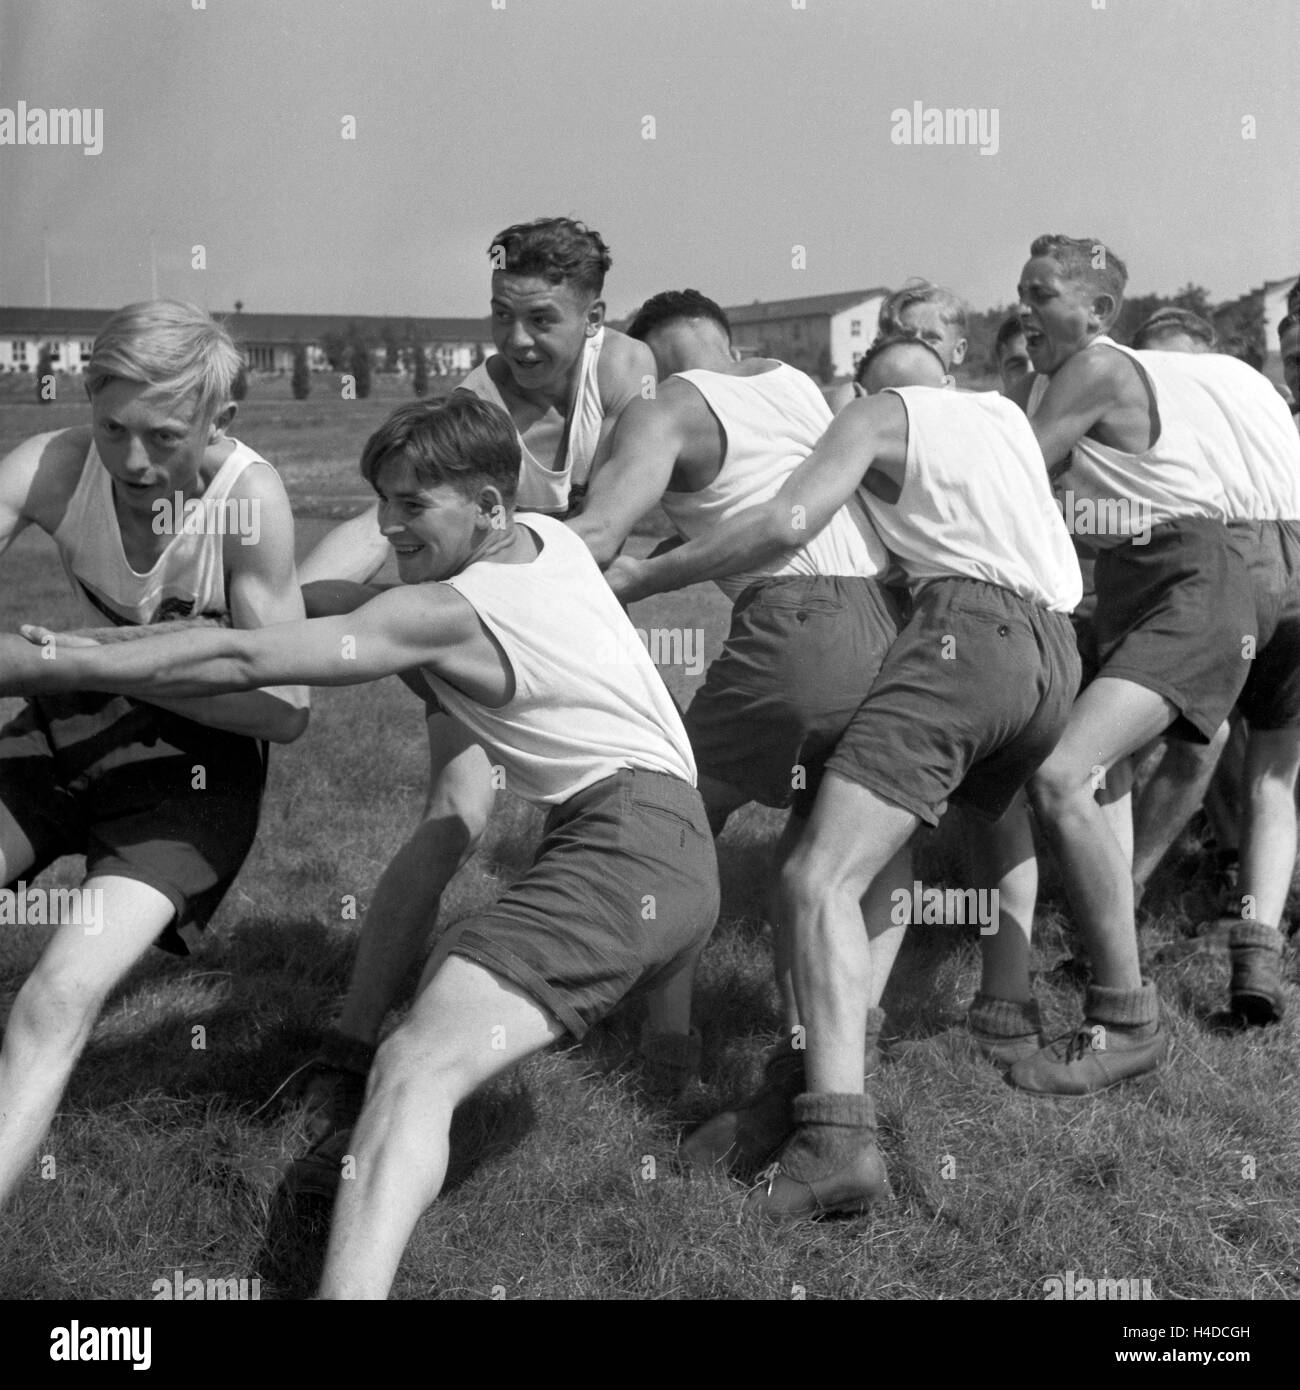 Original-Bildunterschrift : Tauziehen gehört zu den beliebtesten Übungen beim Sport, Deutschland 1940er Jahre. À la corde est l'un des plus exercices préférés, l'Allemagne des années 40. Banque D'Images